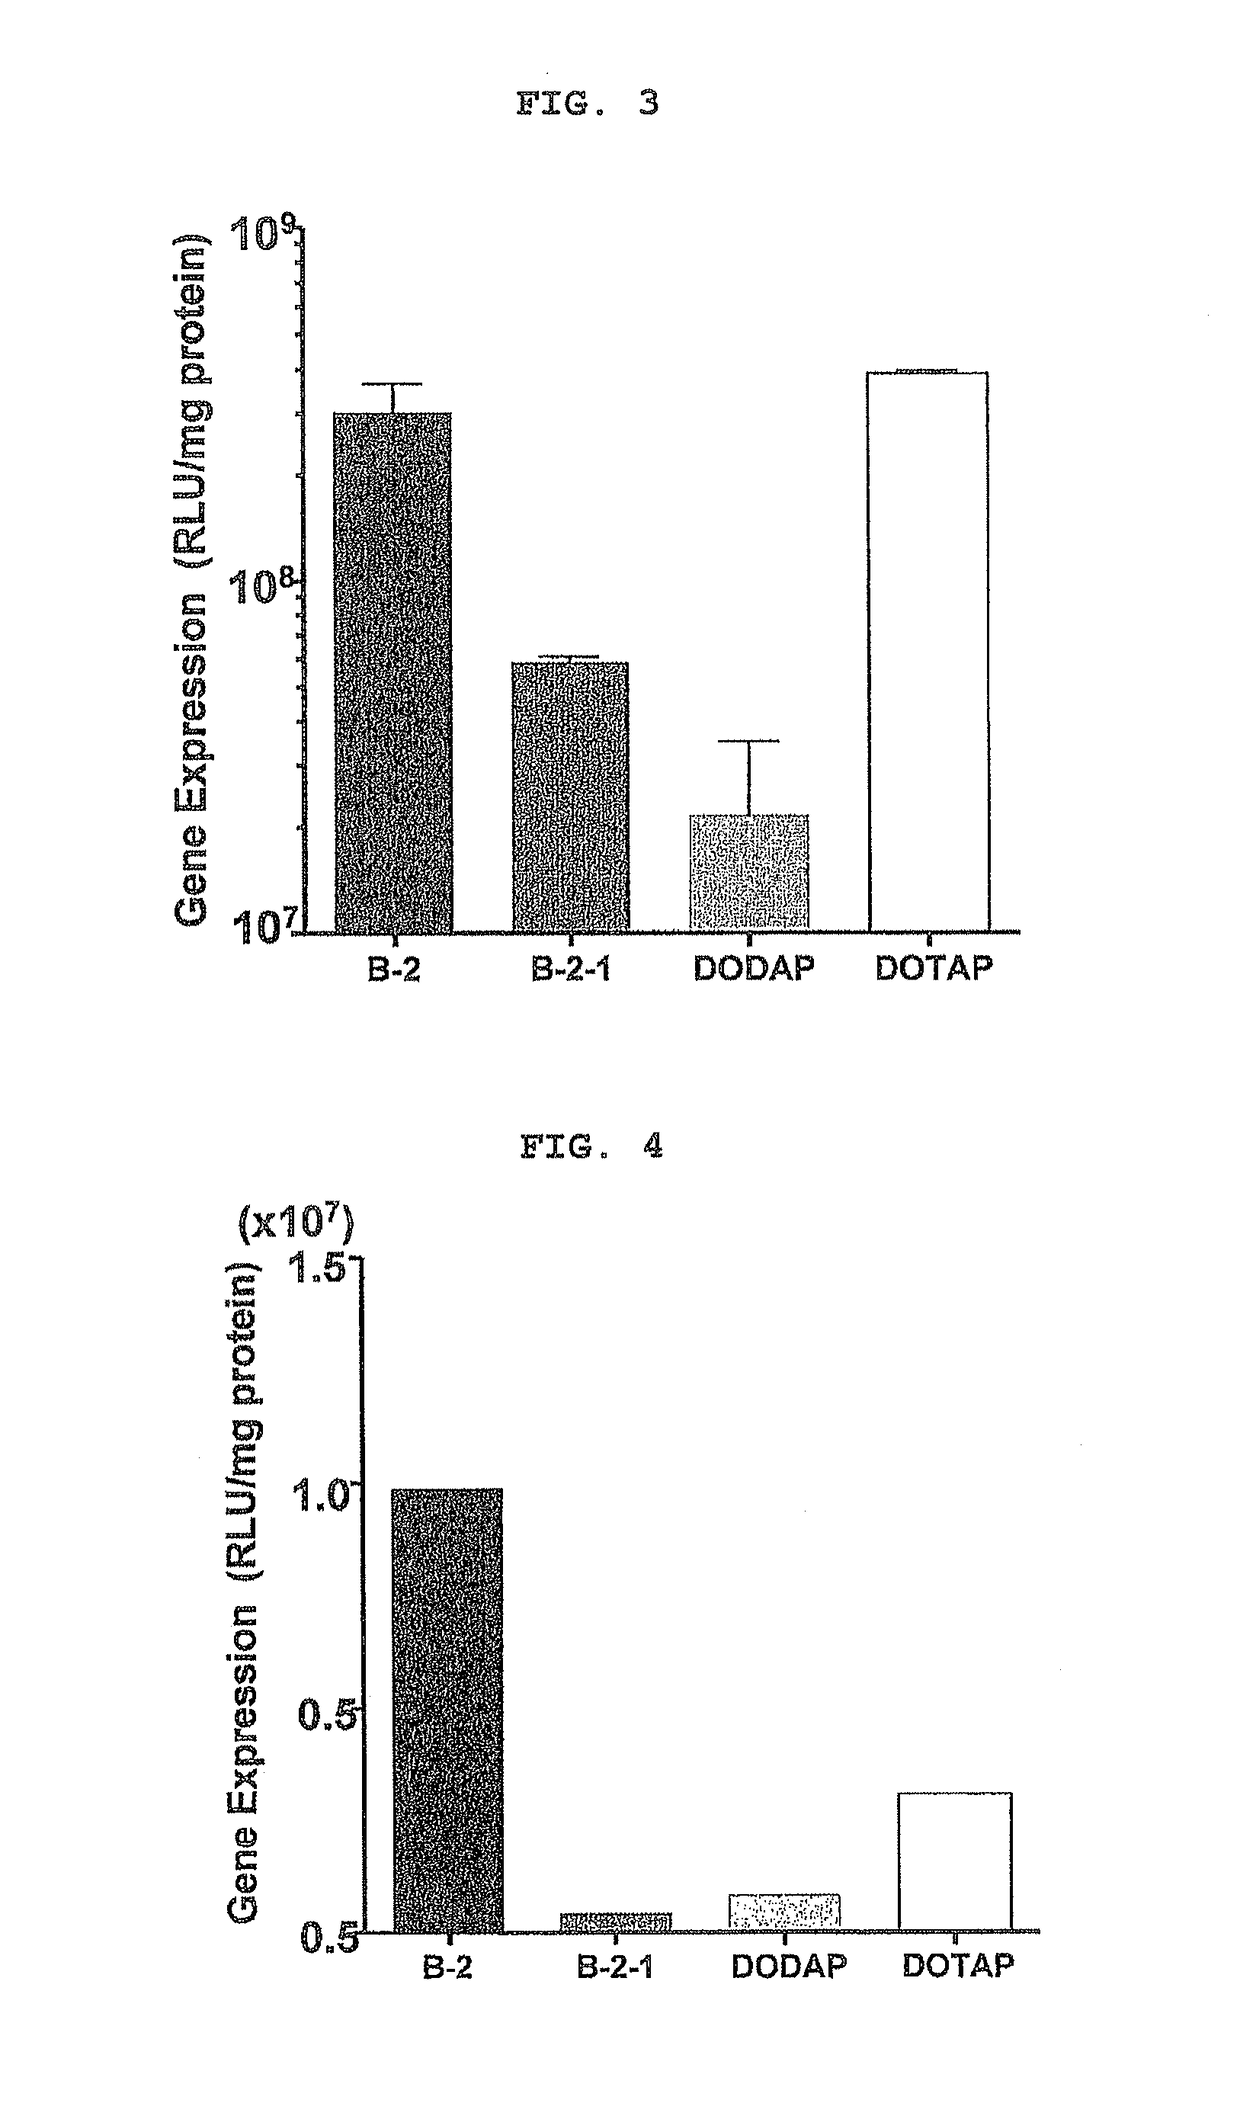 Cationic lipid having improved intracellular kinetics